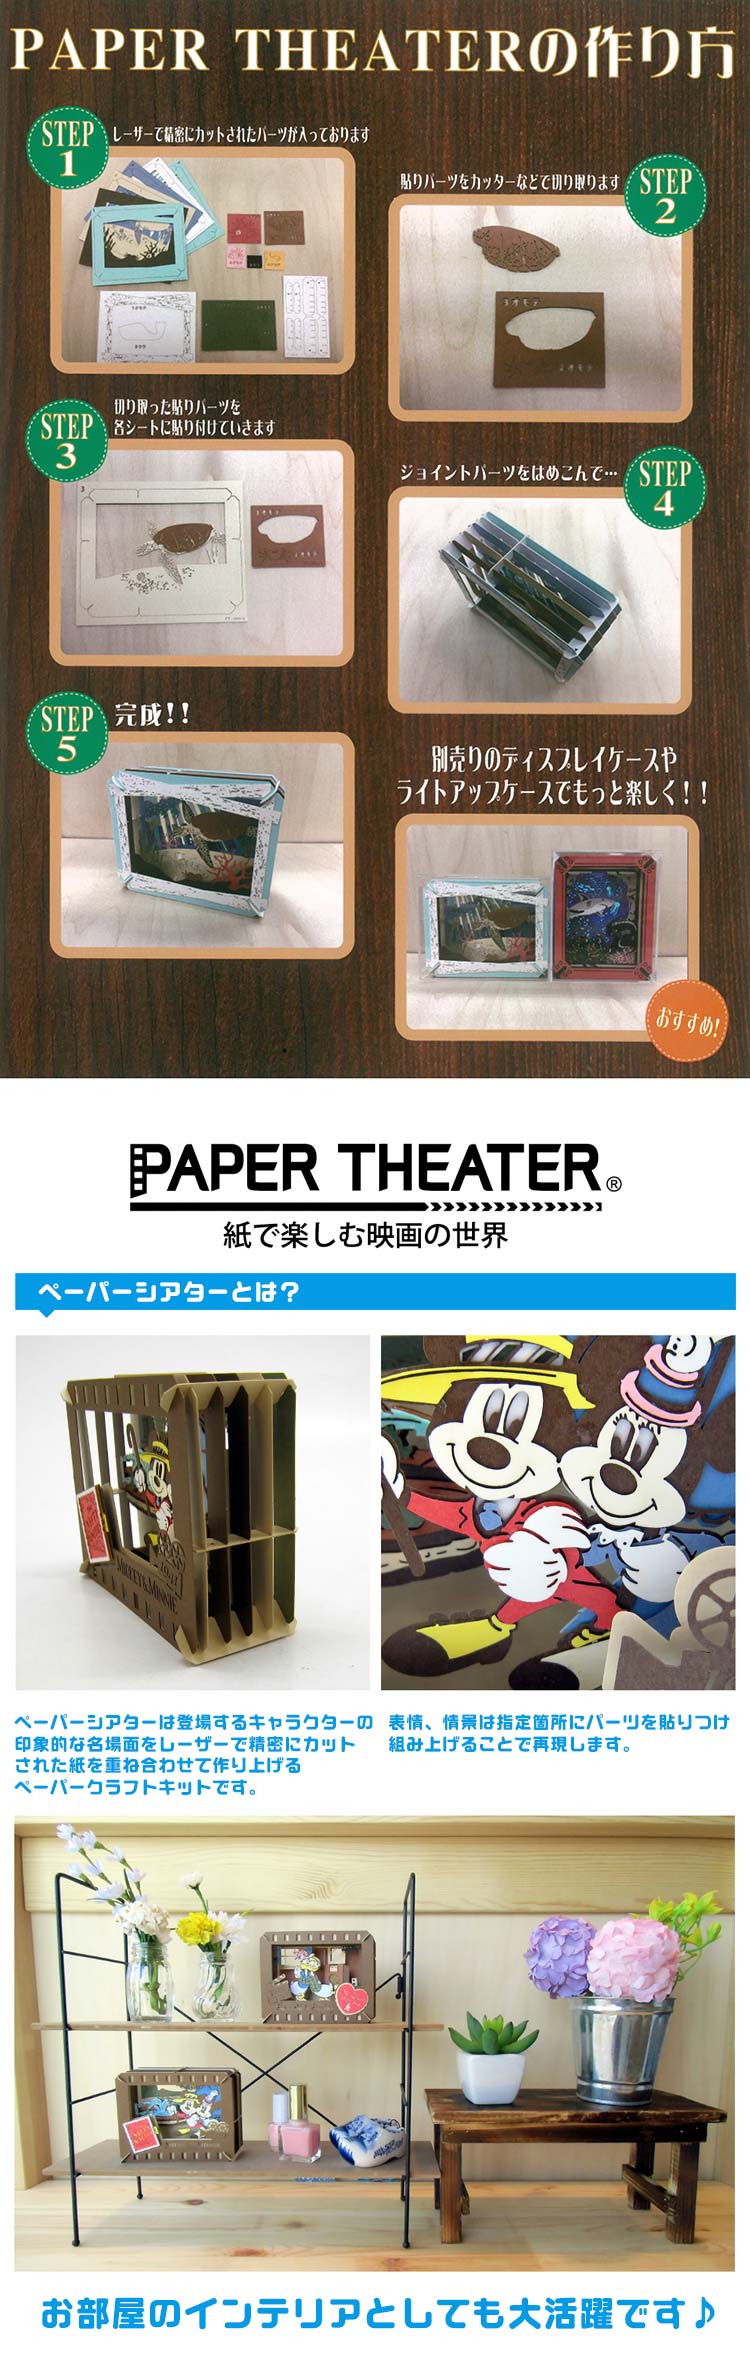 Paper Theater - 火影忍者 宇智波佐助